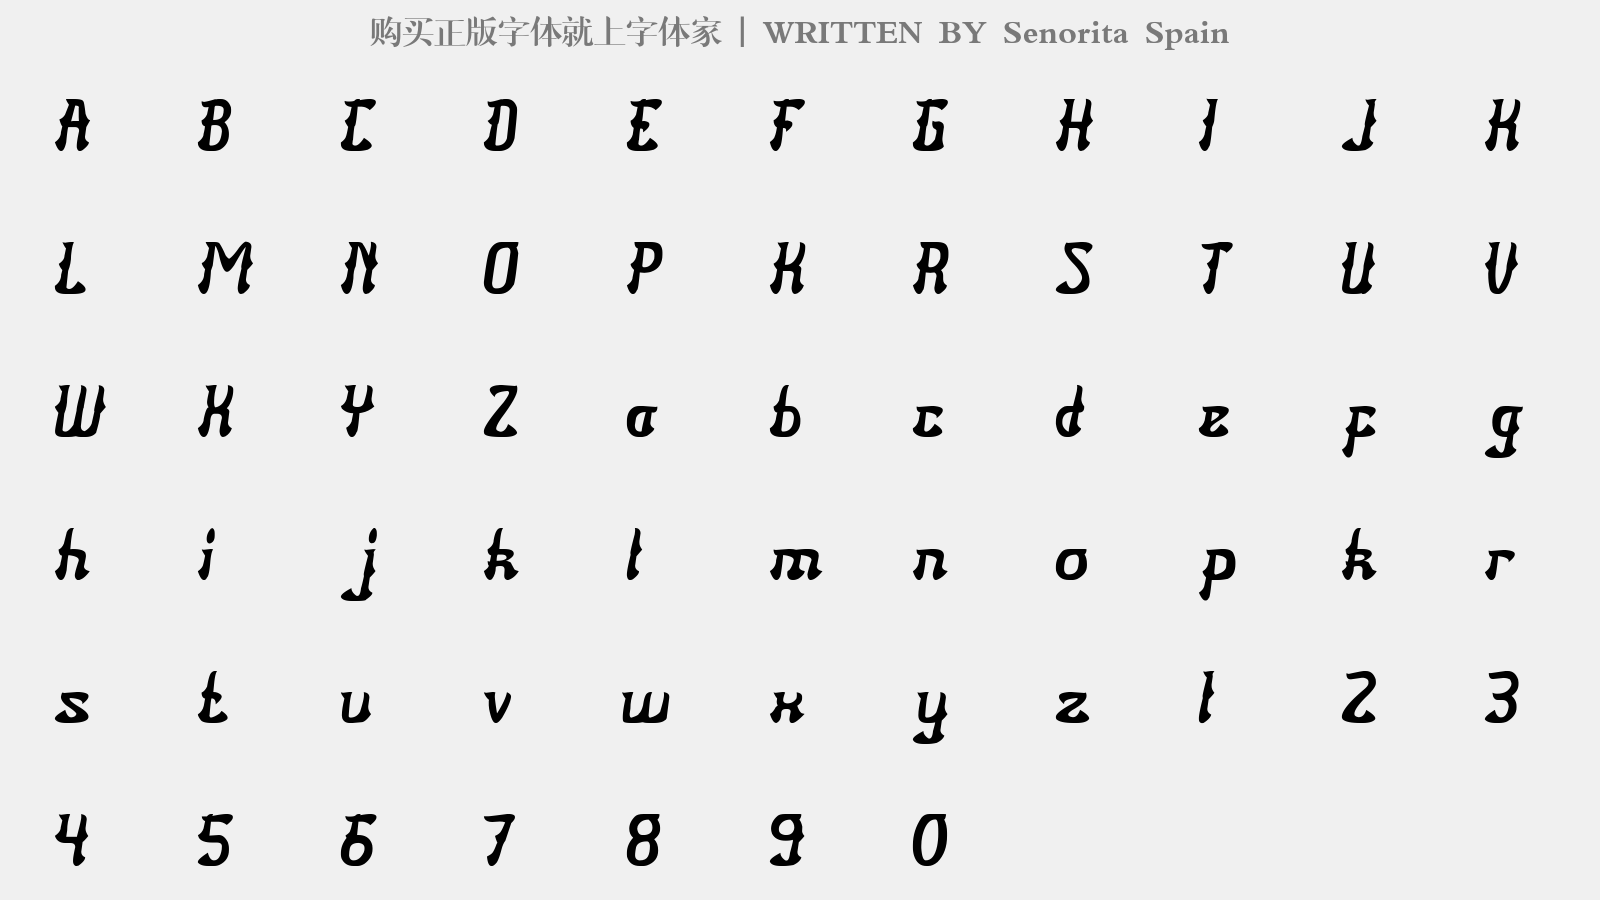 Senorita Spain - 大写字母/小写字母/数字